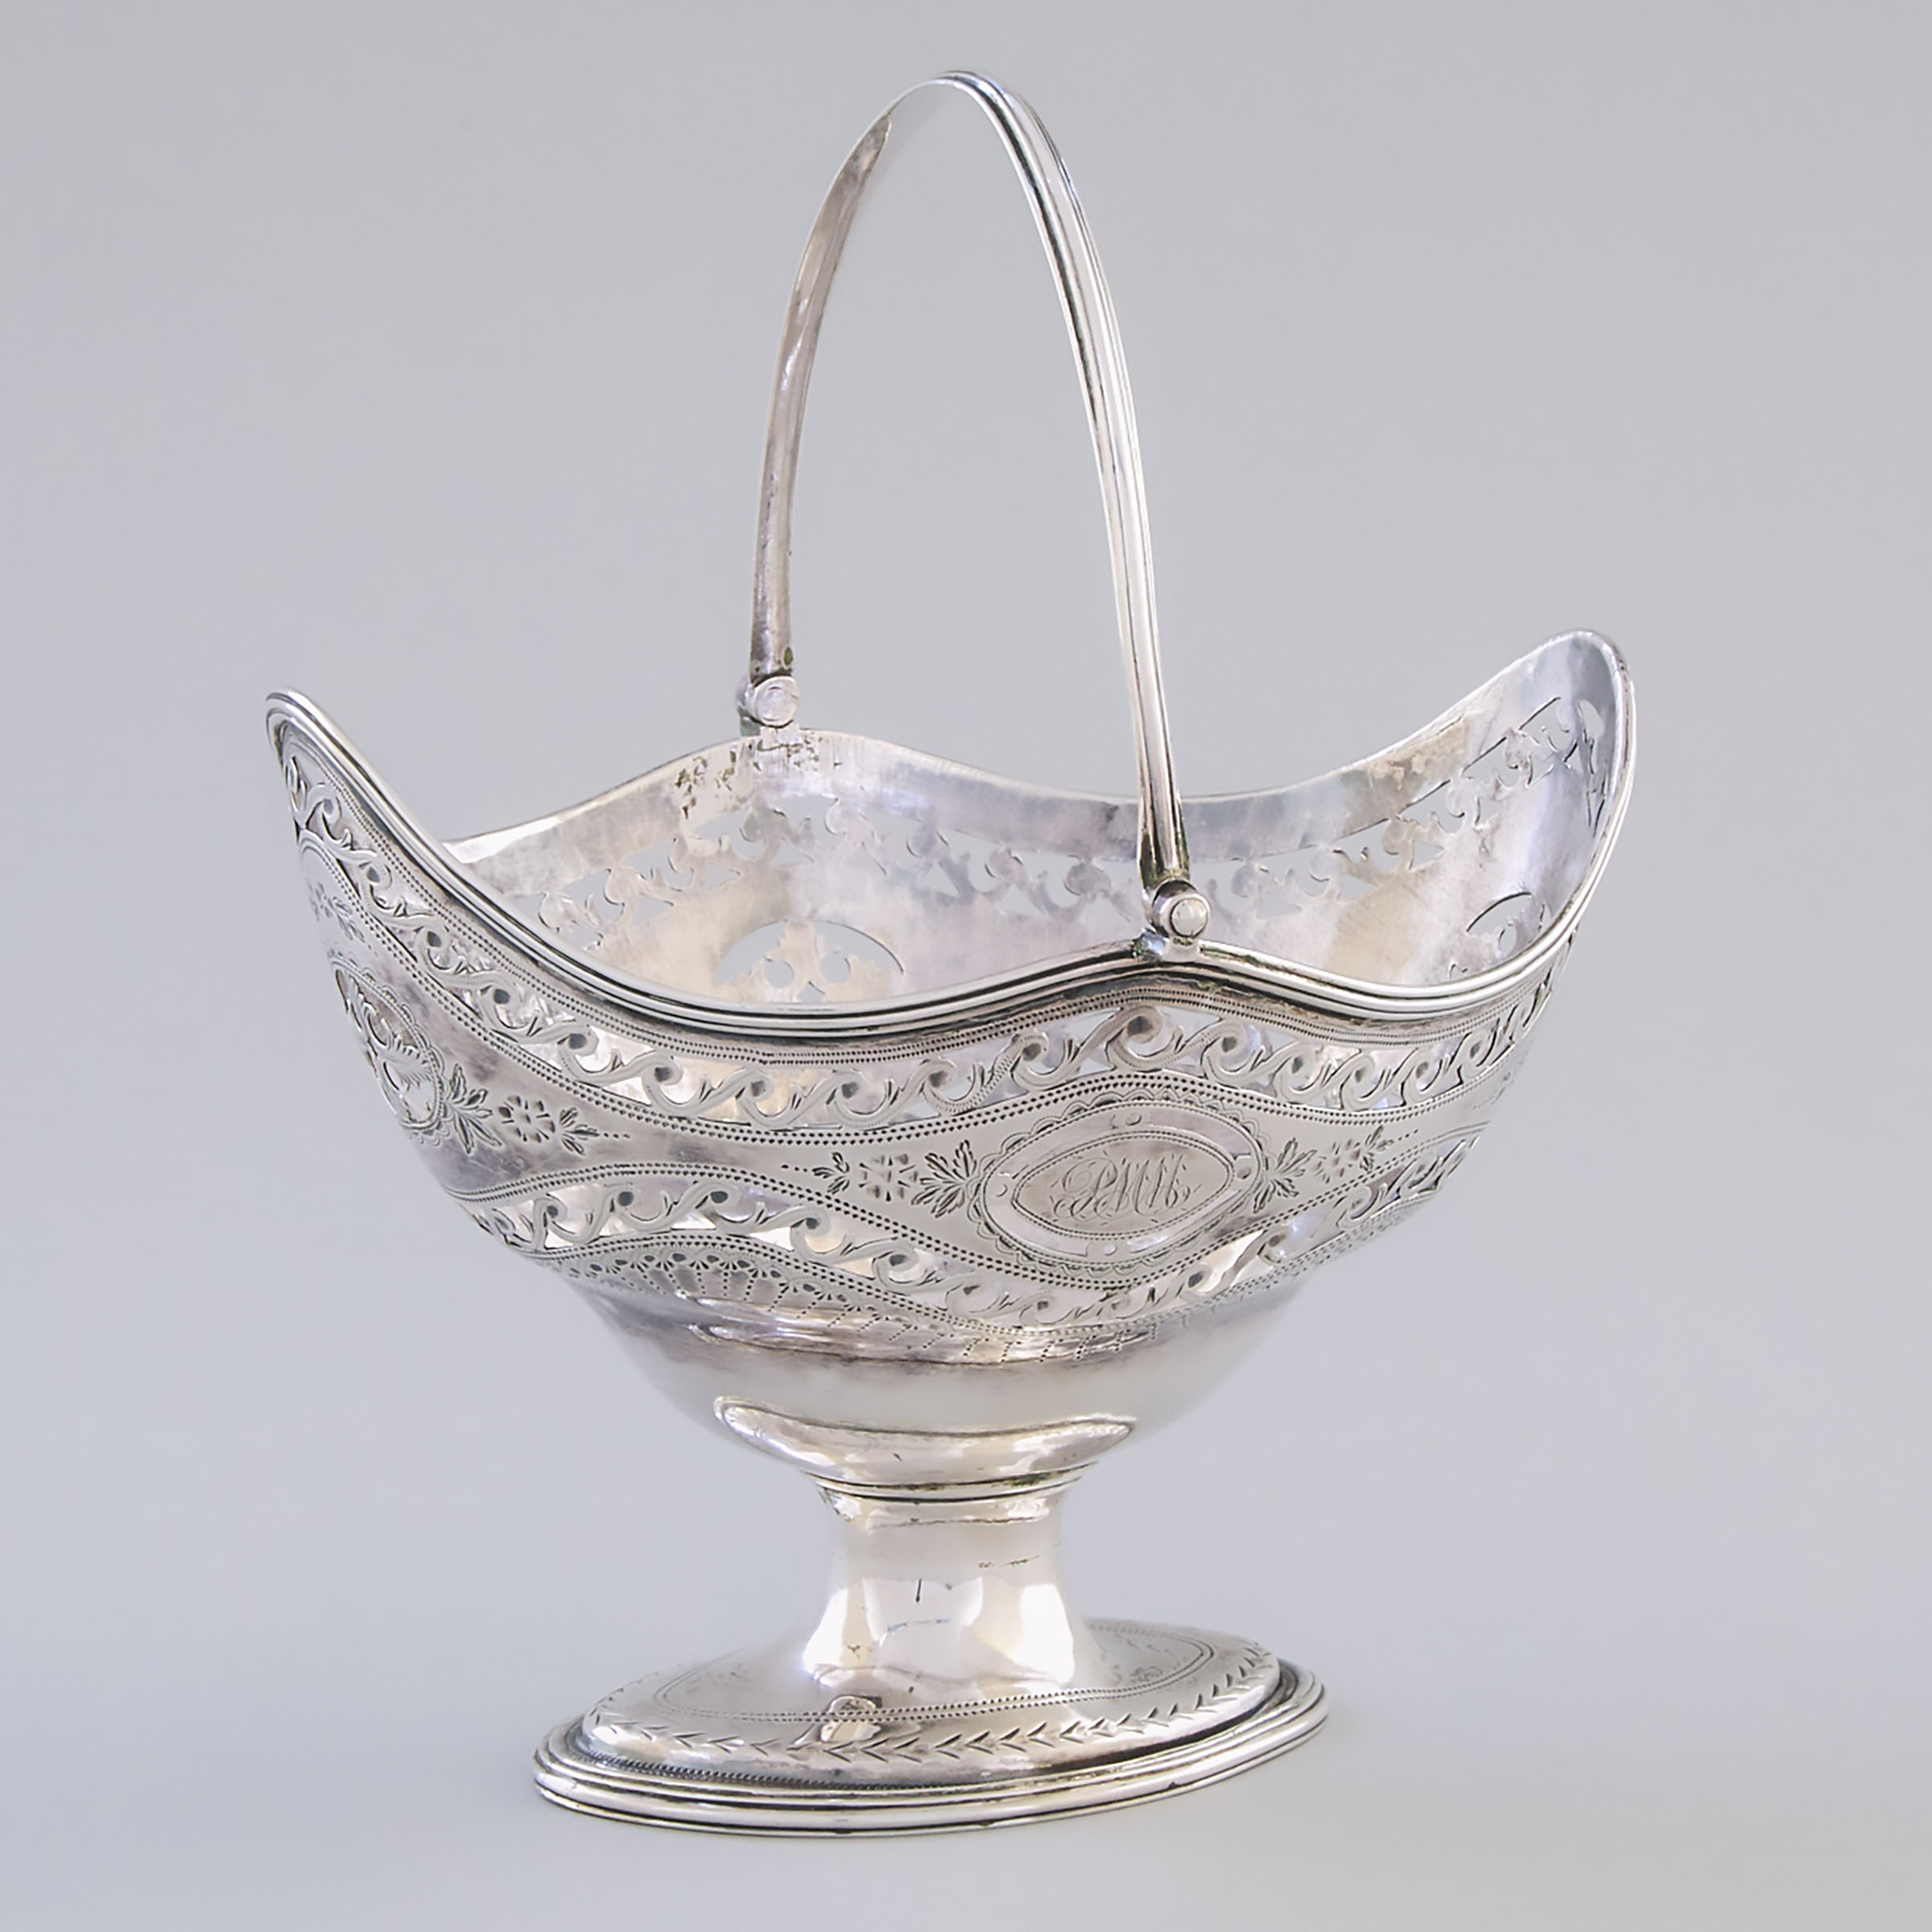 George III Silver Pierced Oval Sugar Basket, Charles Chesterman II, London, 1788